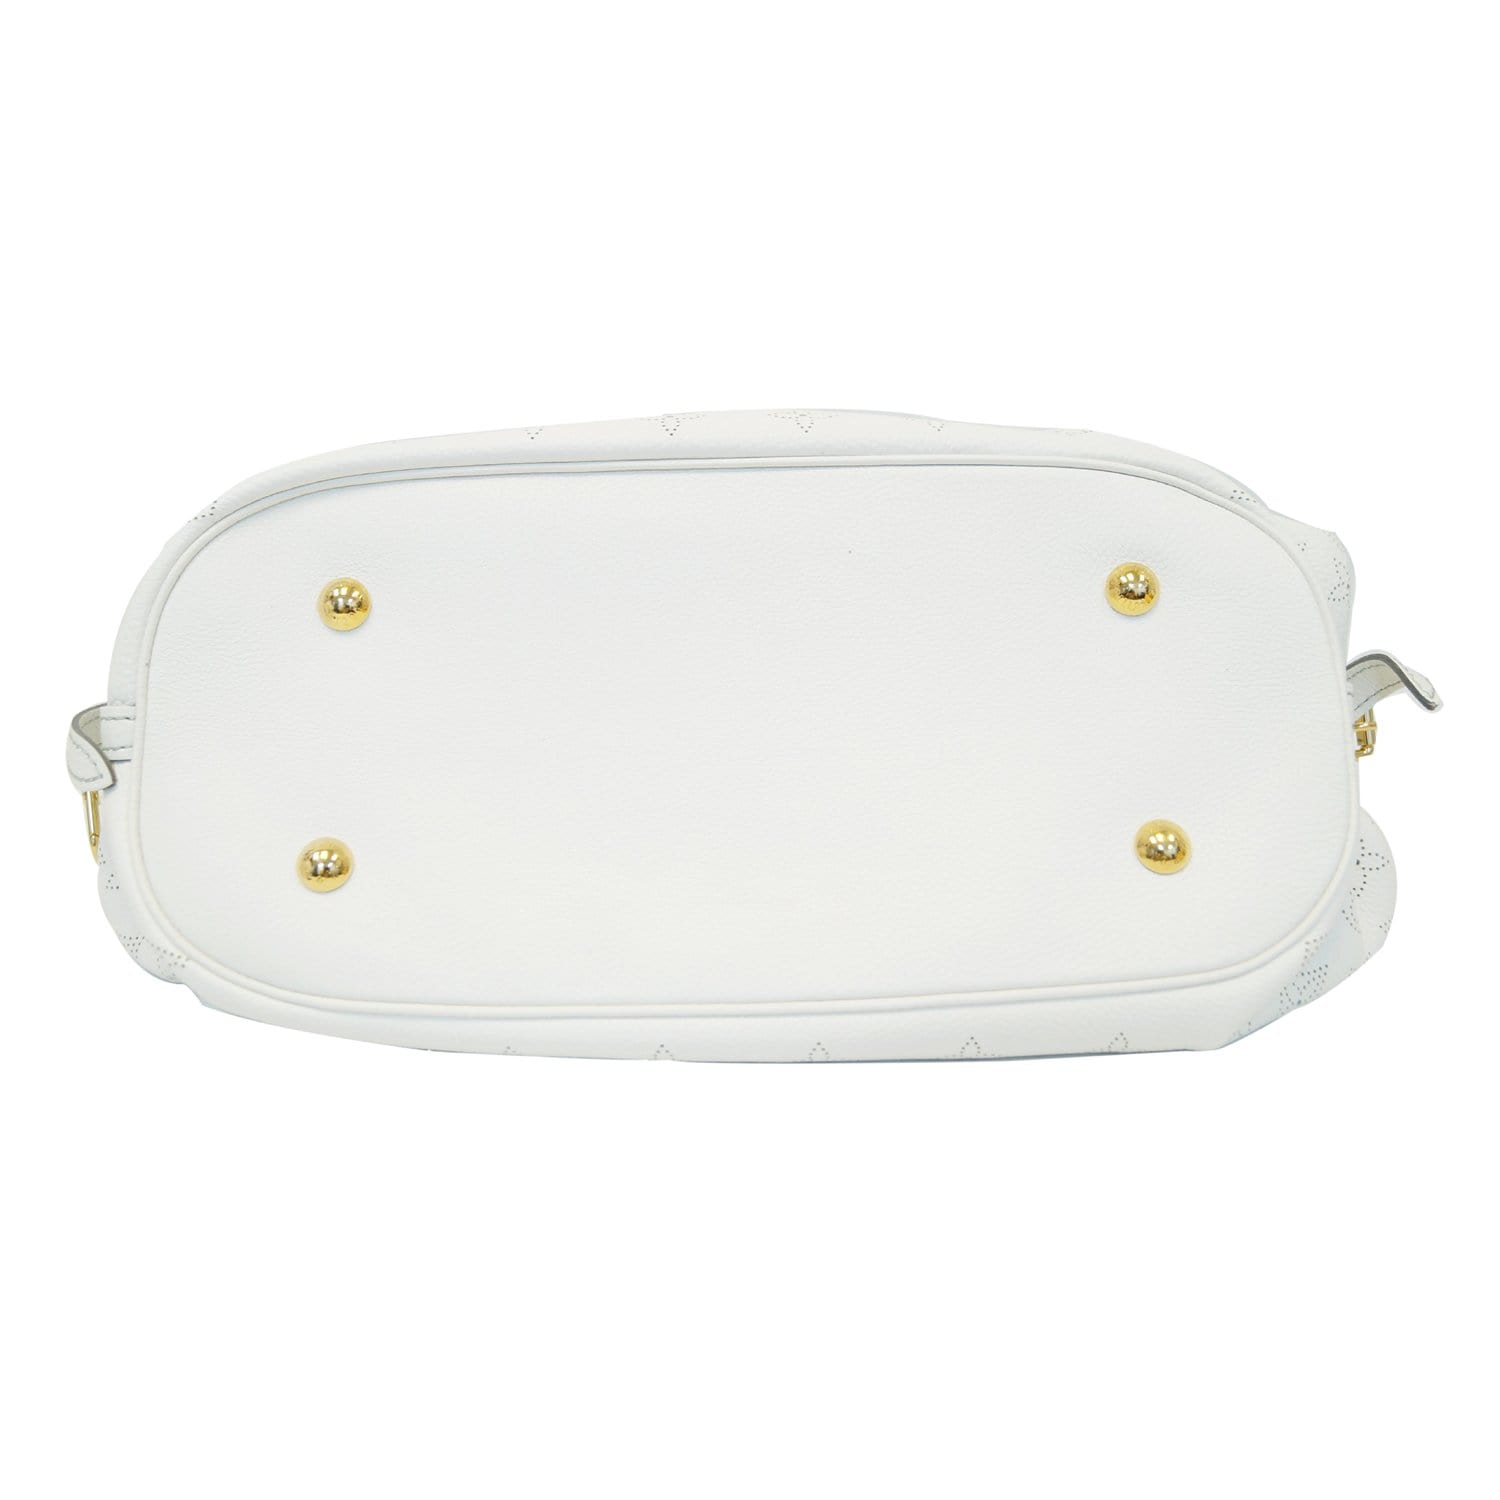 Mahina leather handbag Louis Vuitton White in Leather - 26461207